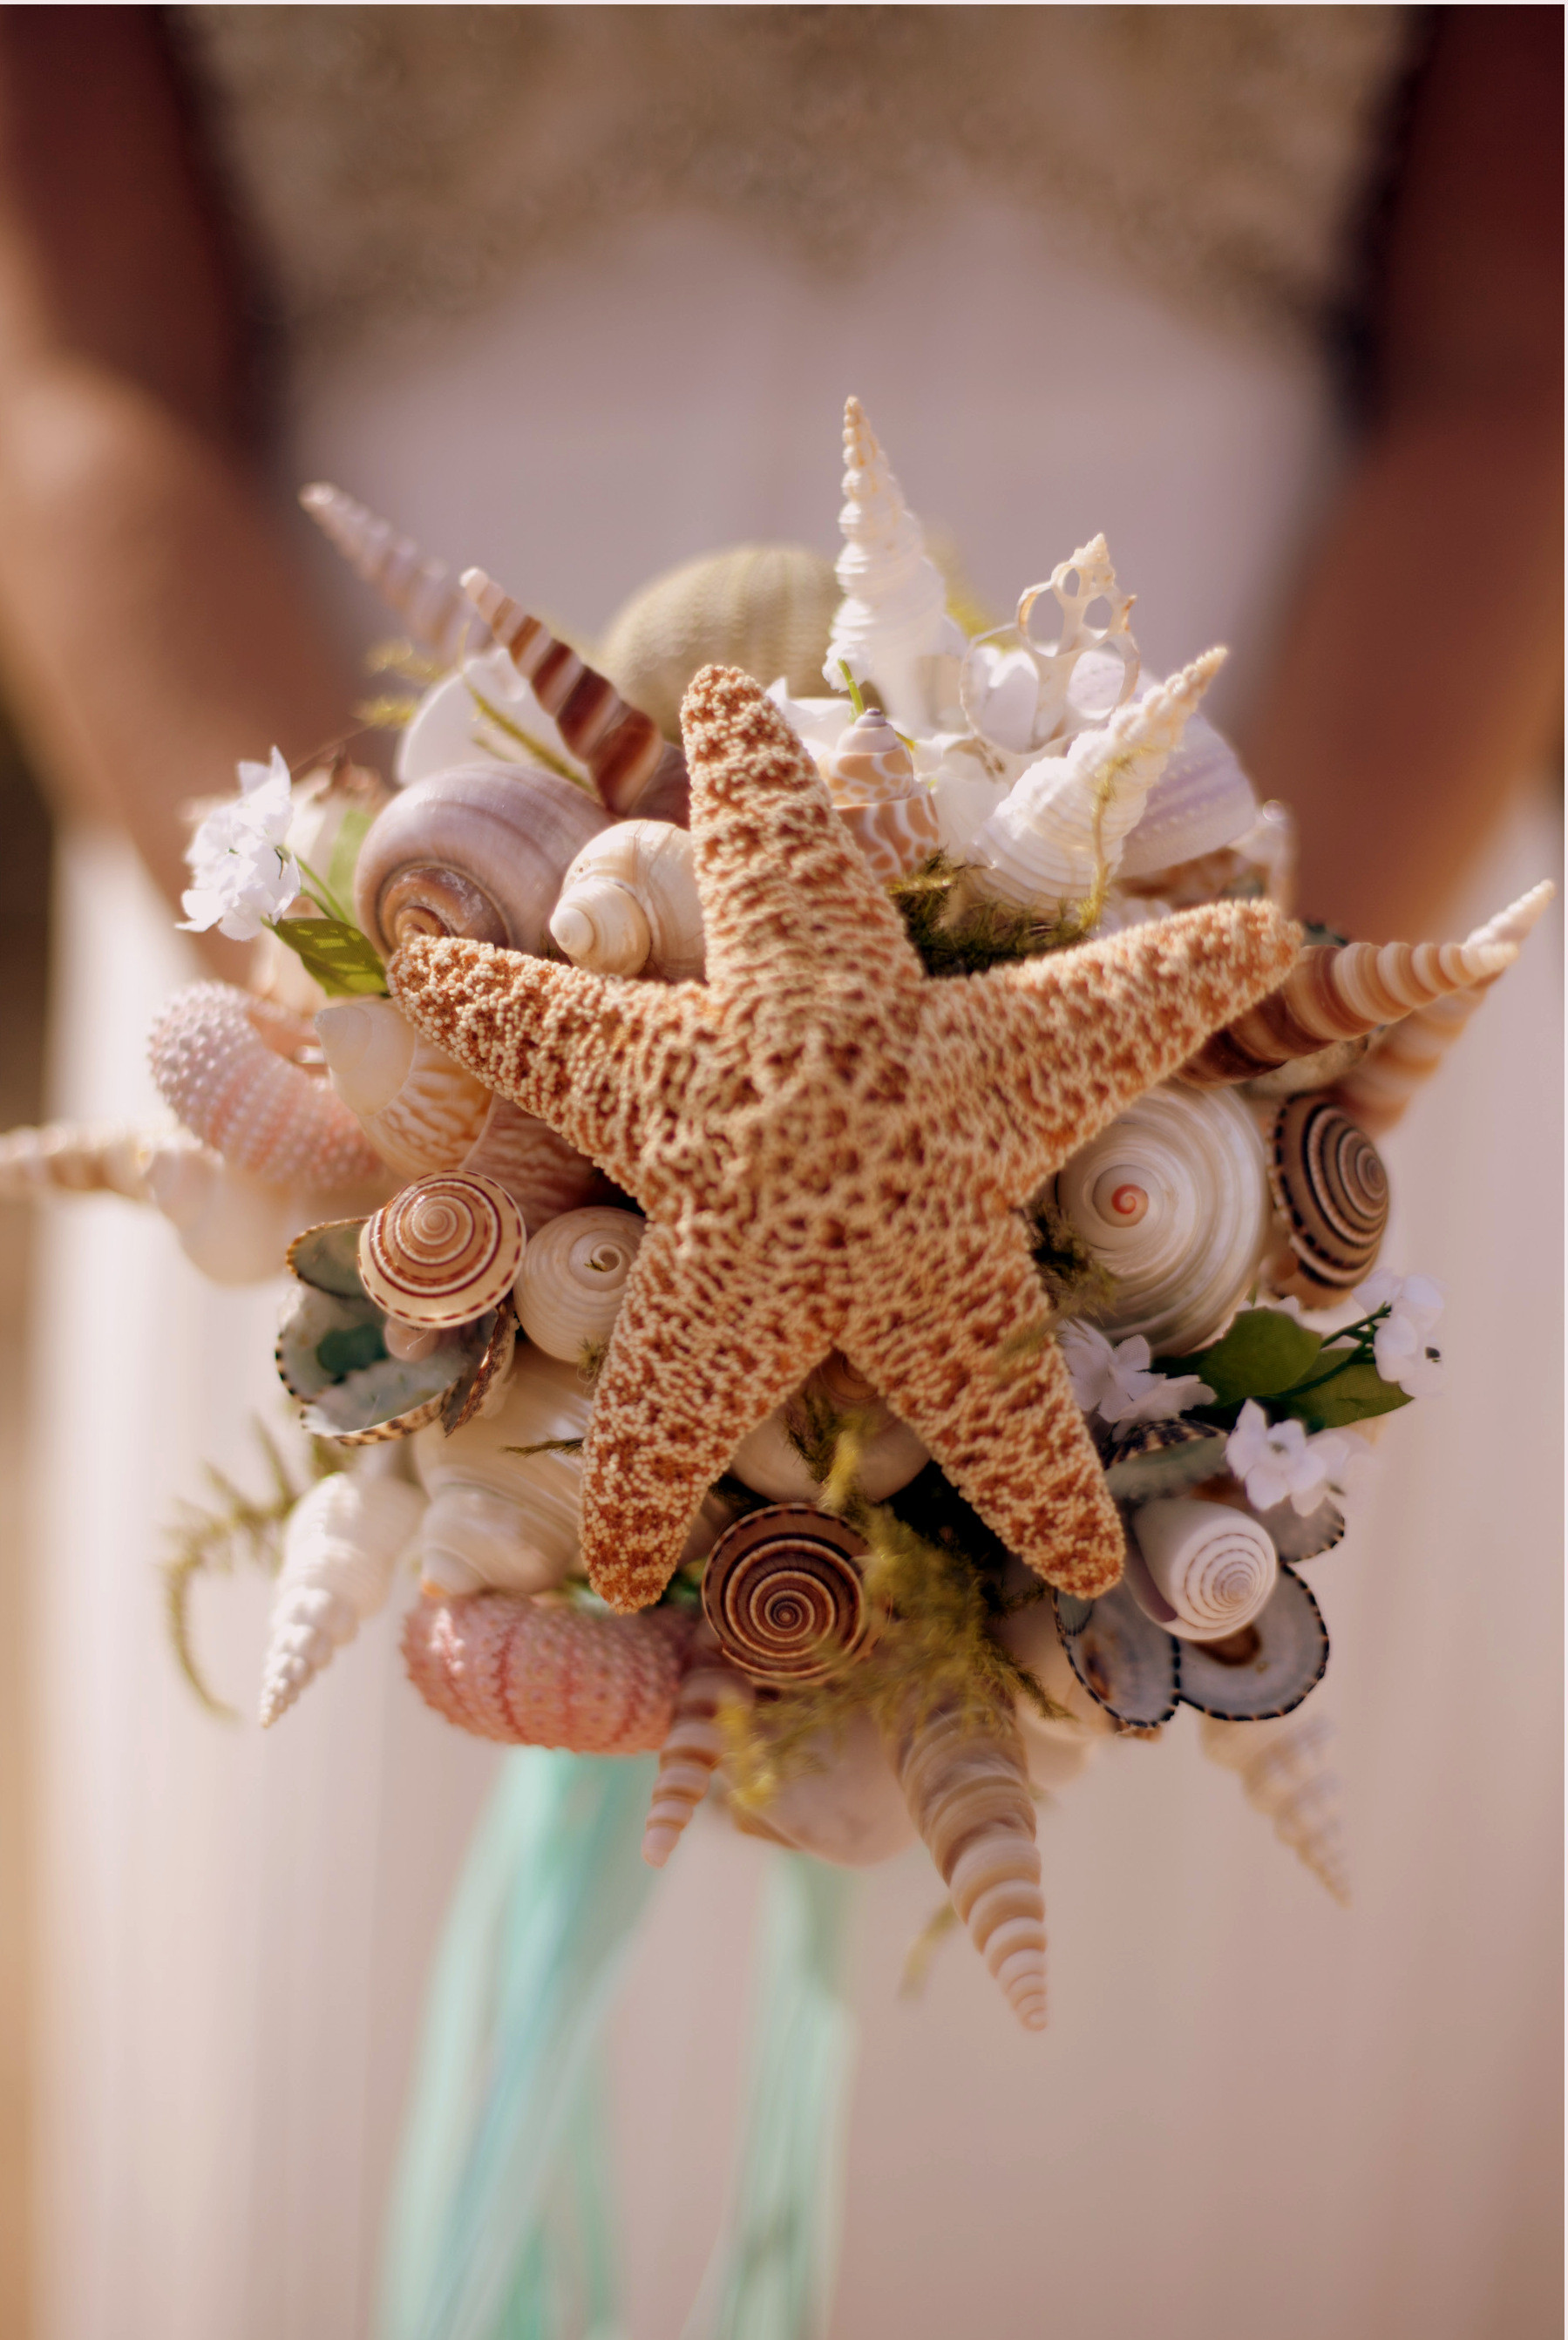 DIY Beach Wedding Ideas
 30 Beach Themed Wedding Projects & DIY Inspiration